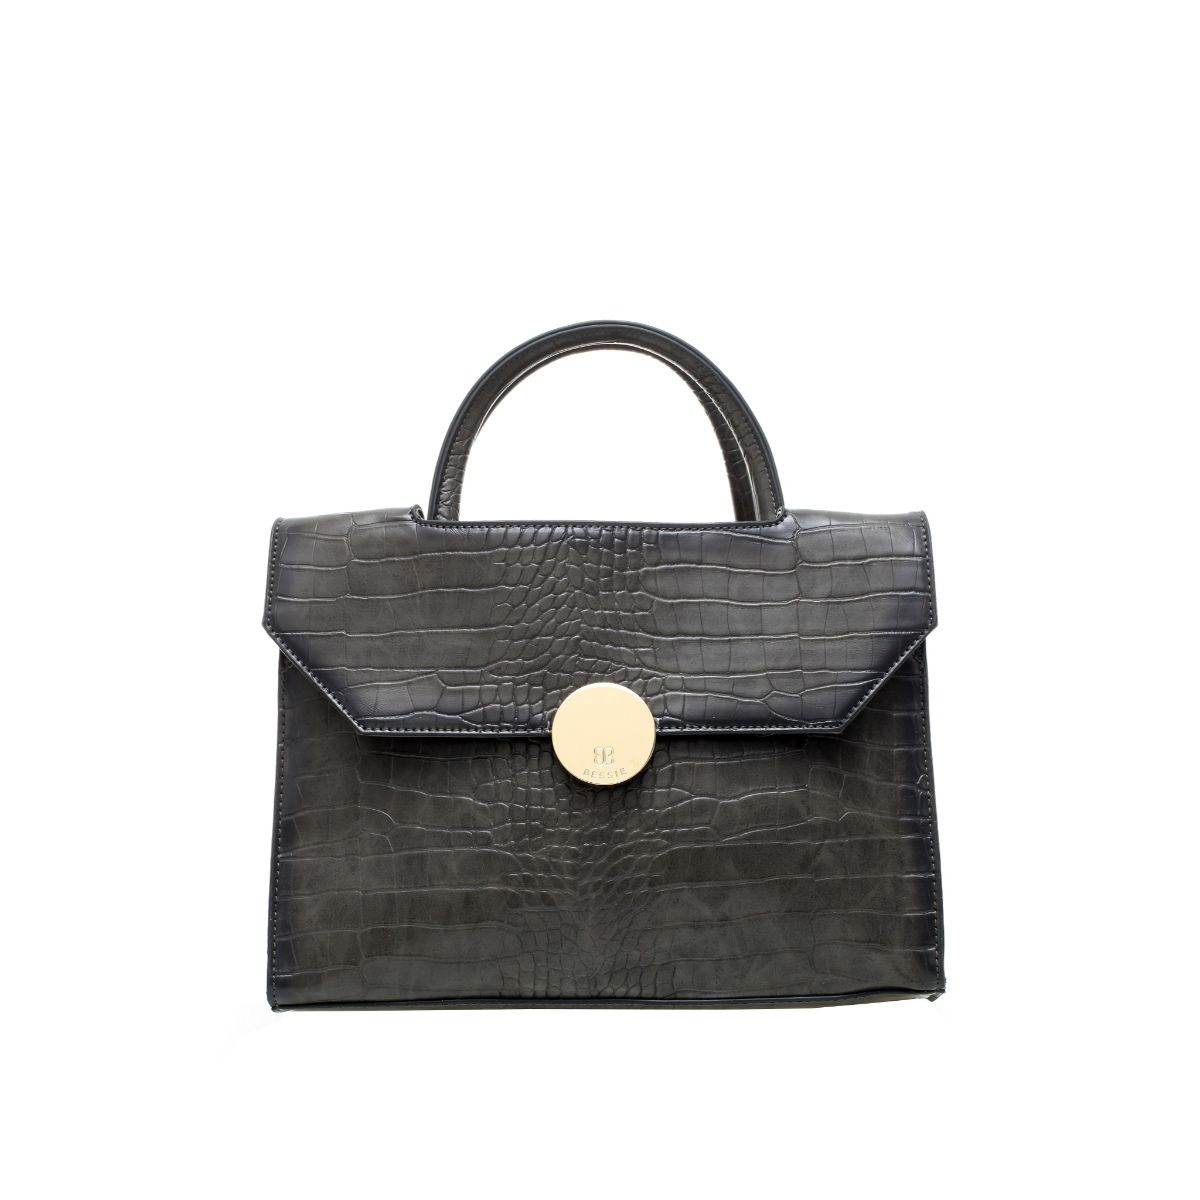 Bessie London Small Handbag: 20% Off, Vegan And Adjustable Length | eBay